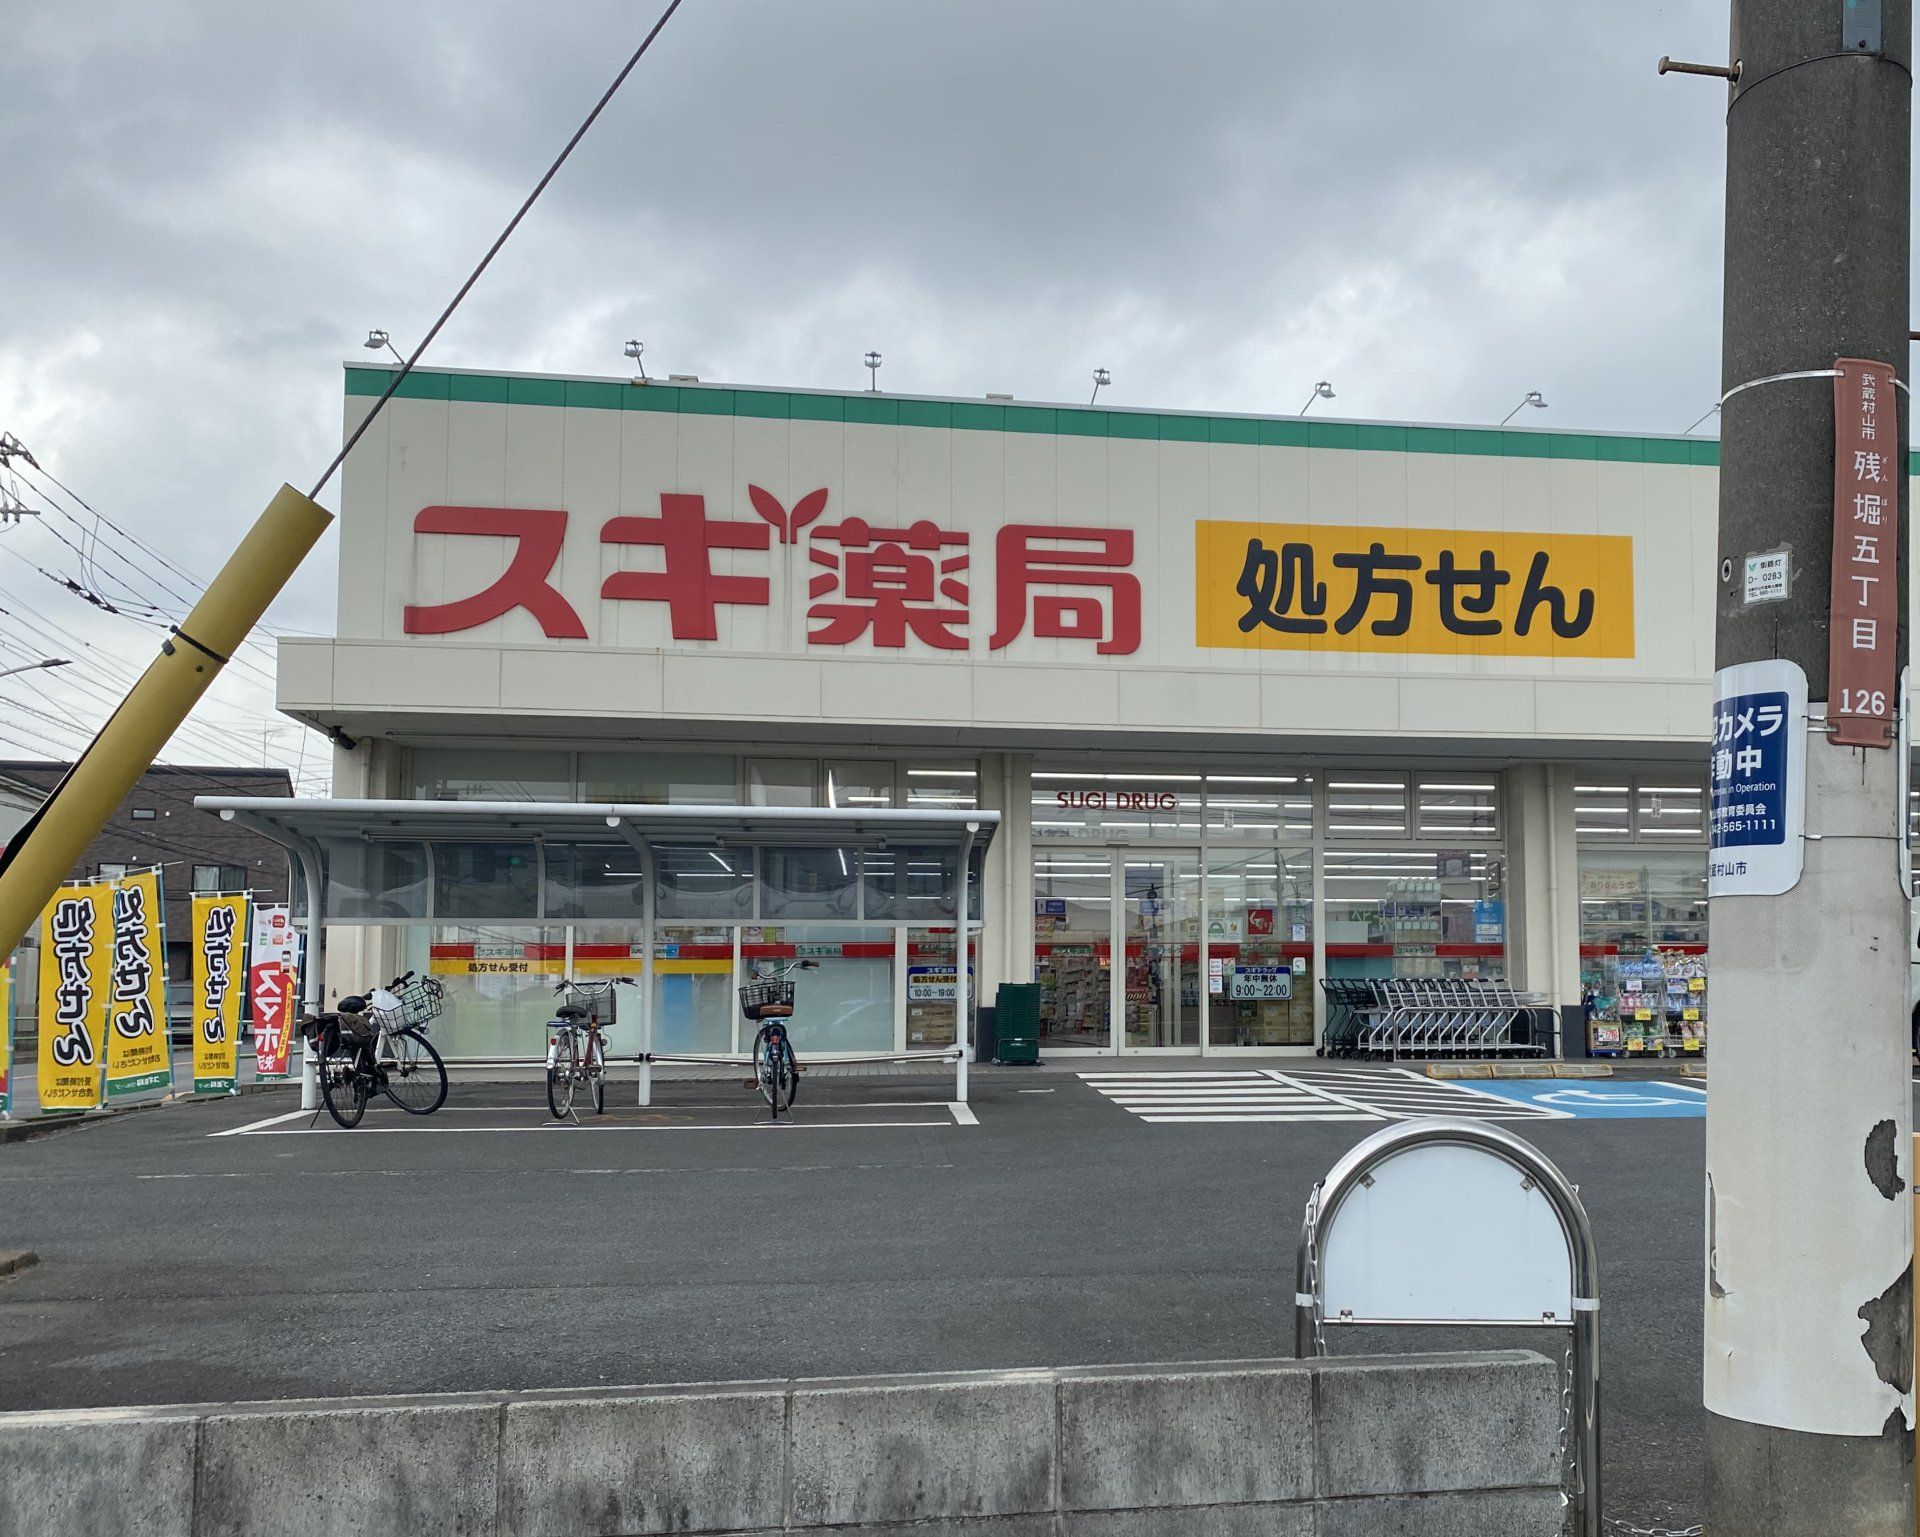 Drug store in Japan